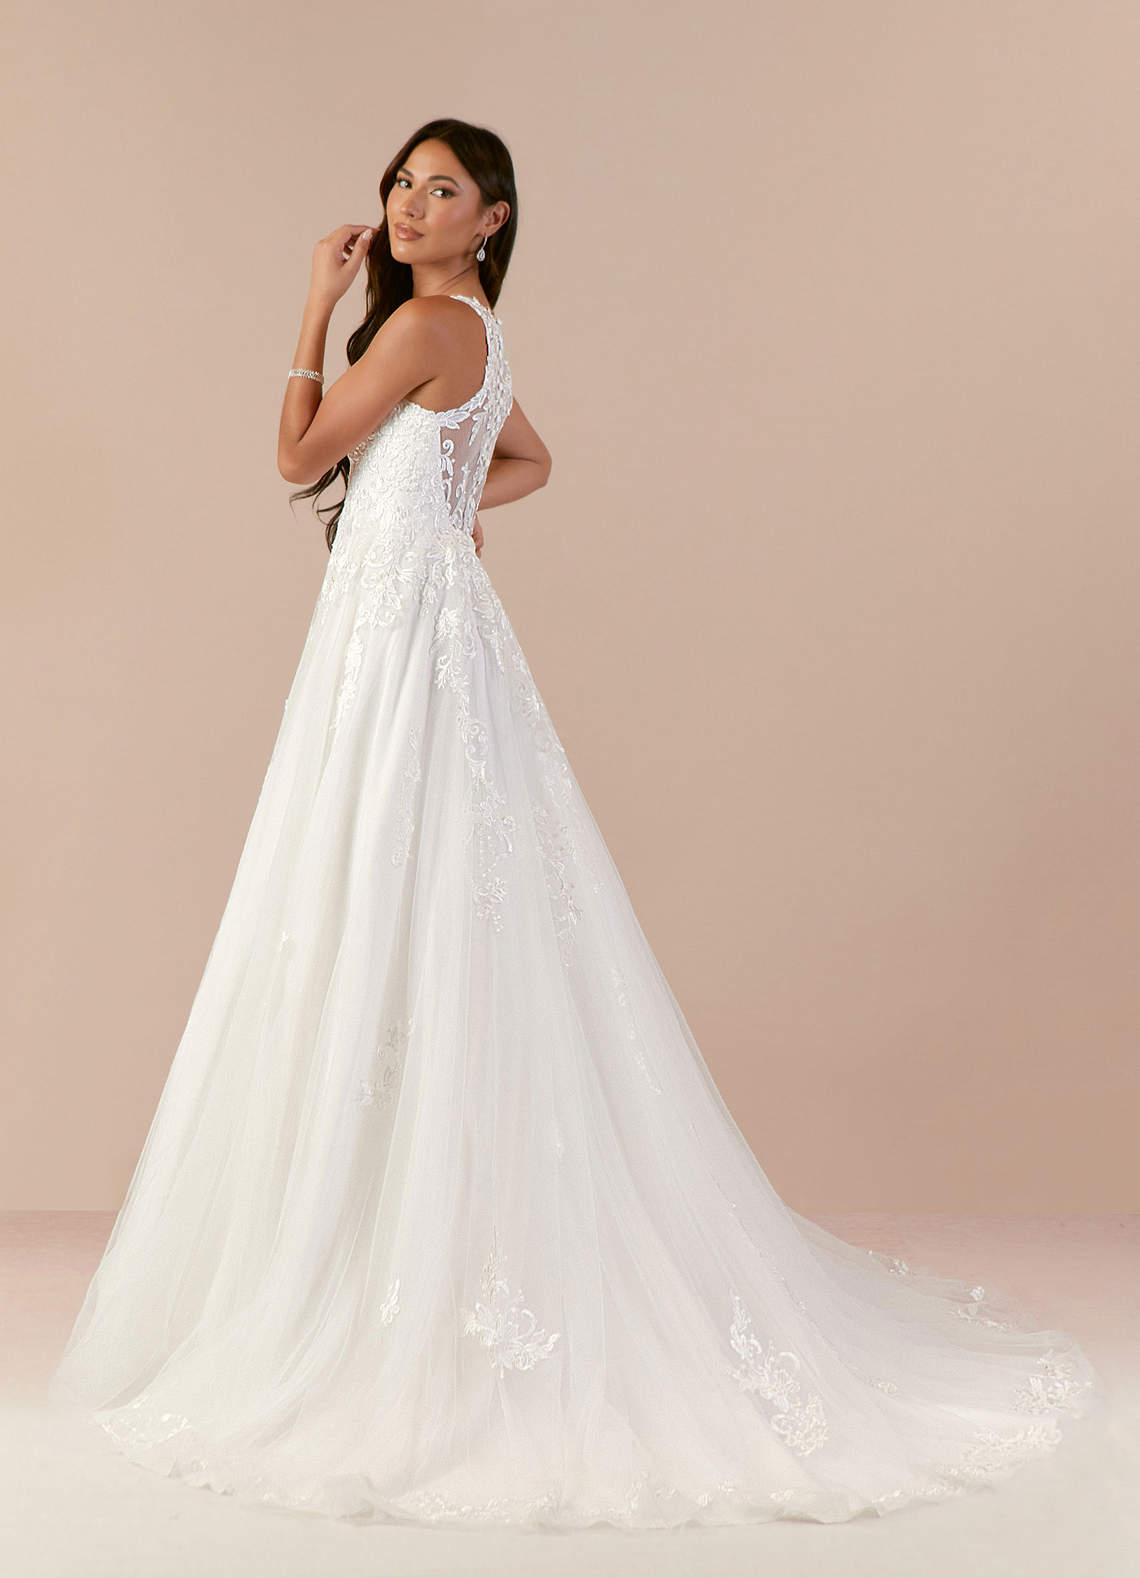 Azazie Melrose Wedding Dresses A-Line Sweetheart Lace Tulle Chapel Train Dress image1